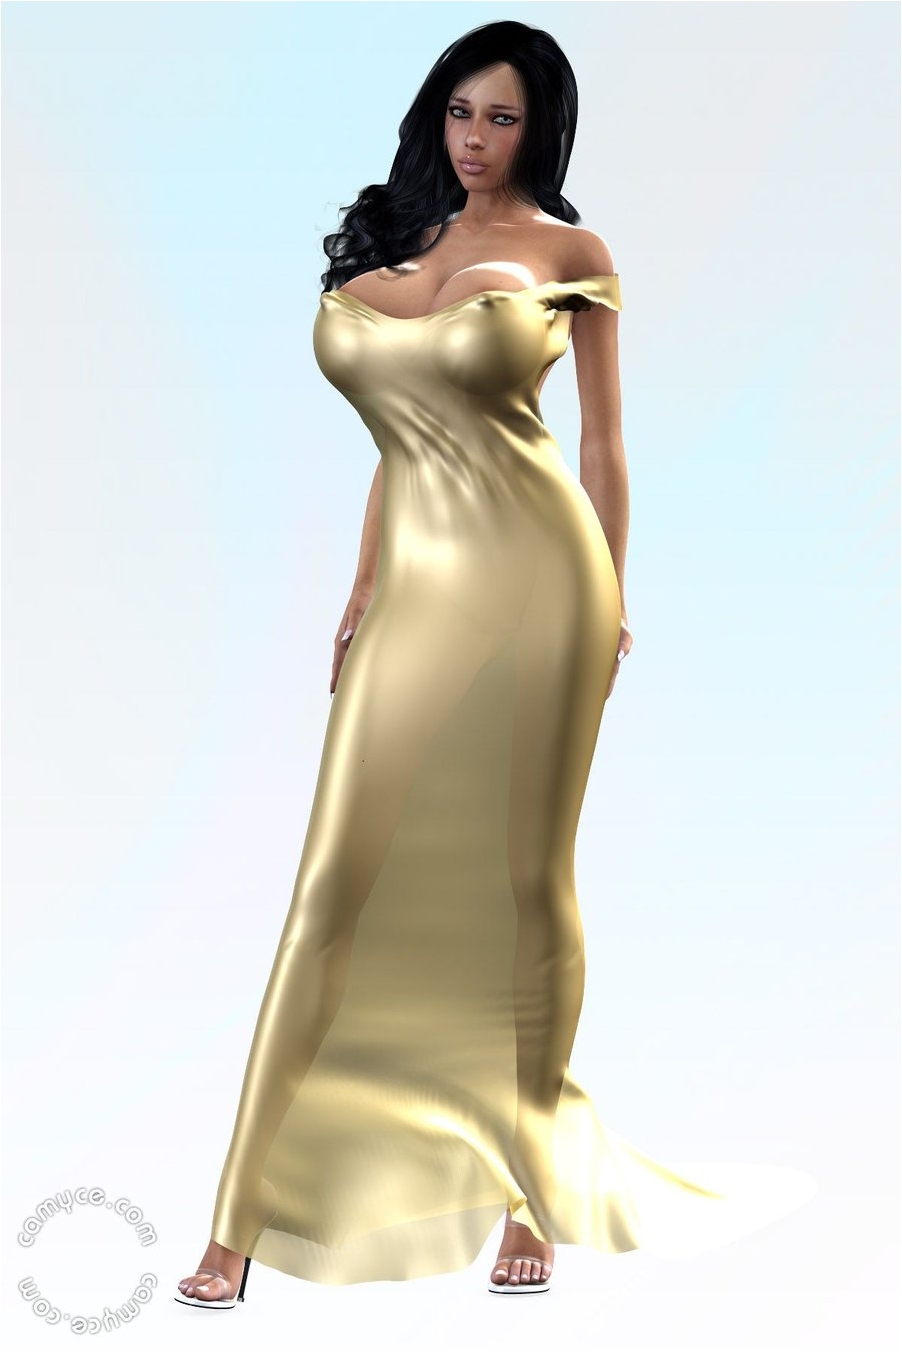 Xhime.com_Camyce_big_tits_golden_dress_by_hugetits3d.jpg